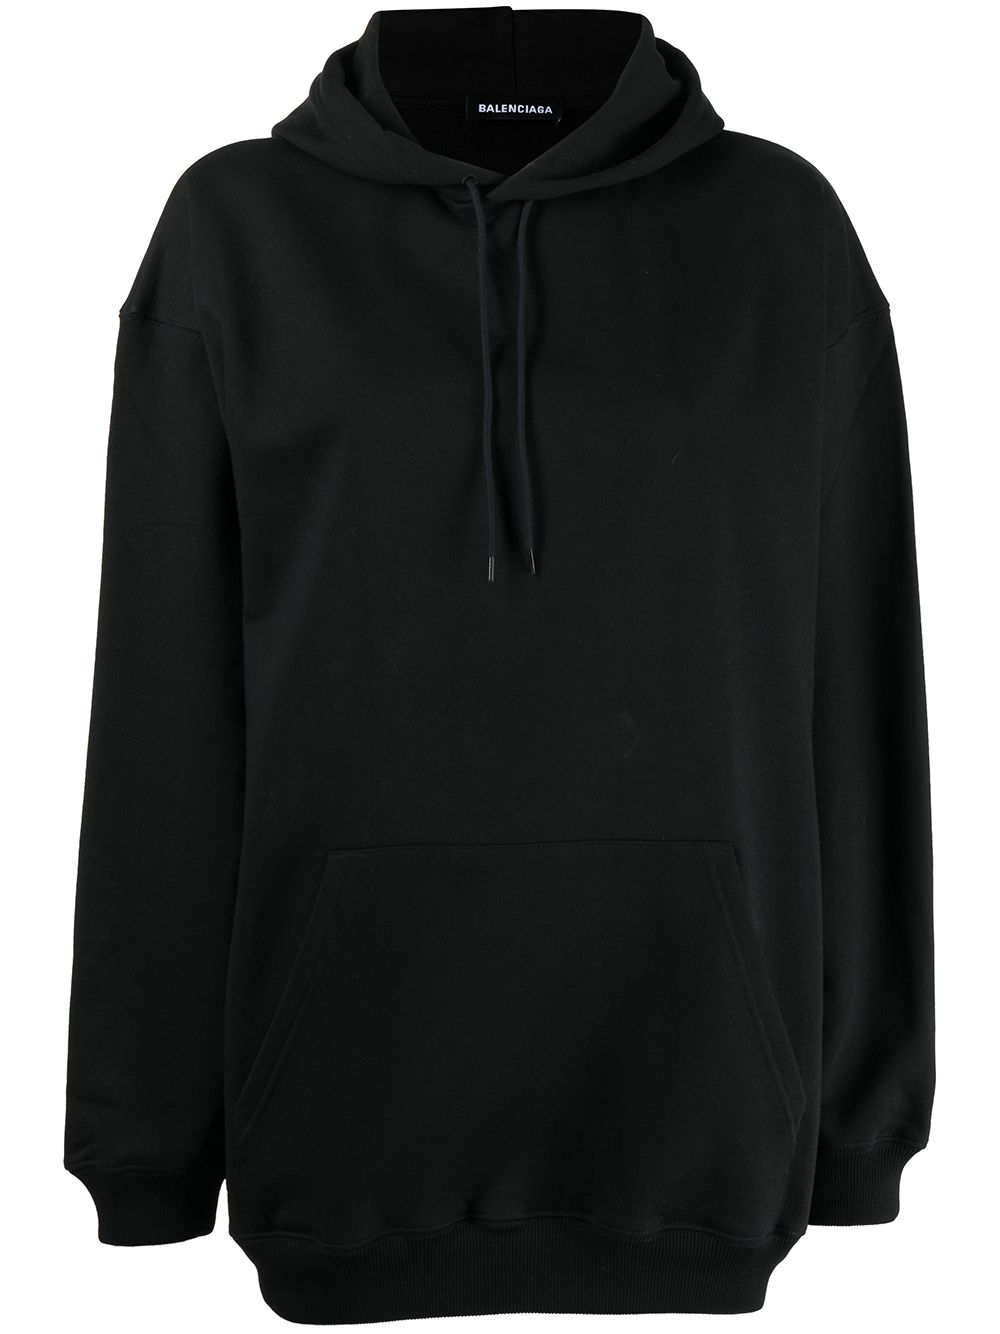 Shop Balenciaga logo hoodie with Express Delivery - FARFETCH